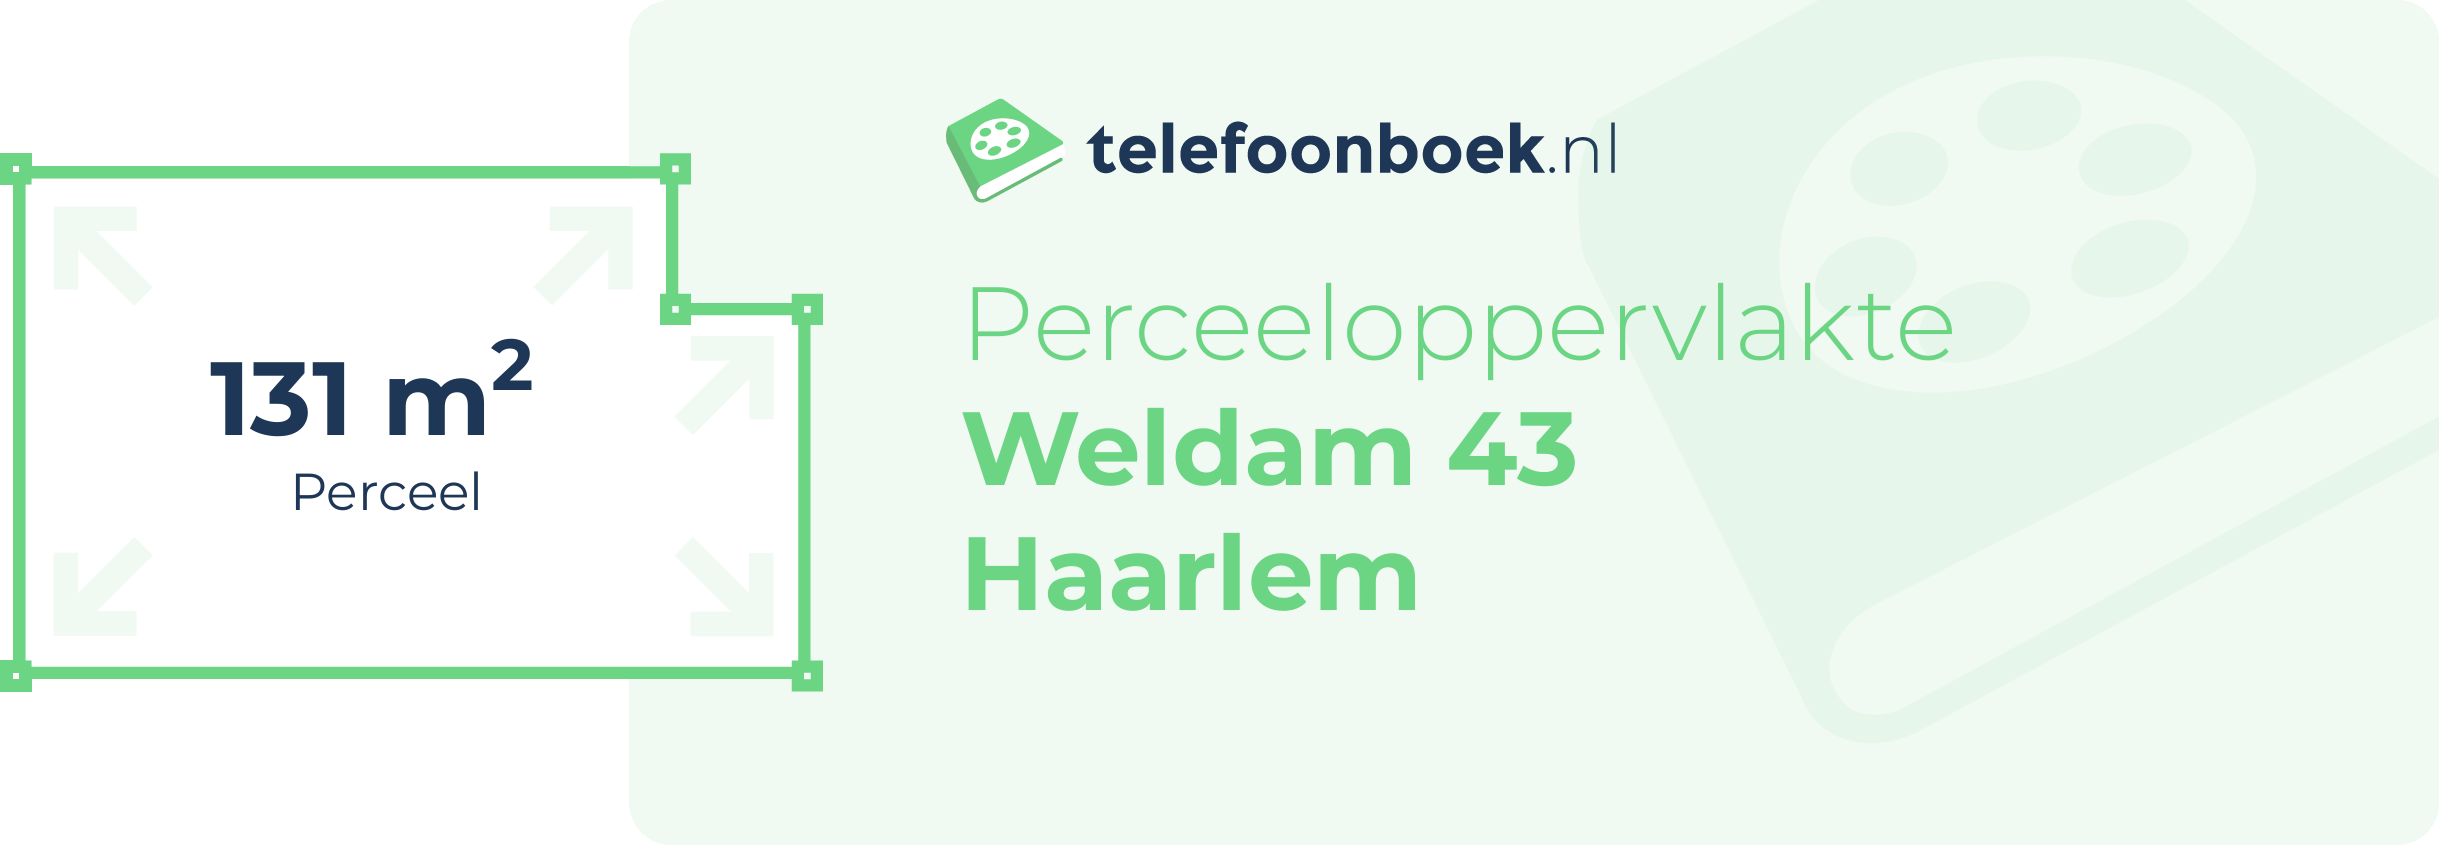 Perceeloppervlakte Weldam 43 Haarlem